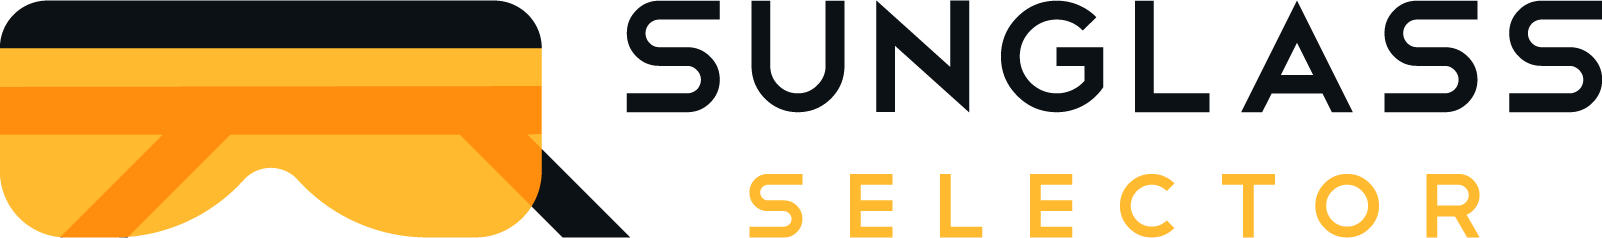 Sunglass Selector Logo